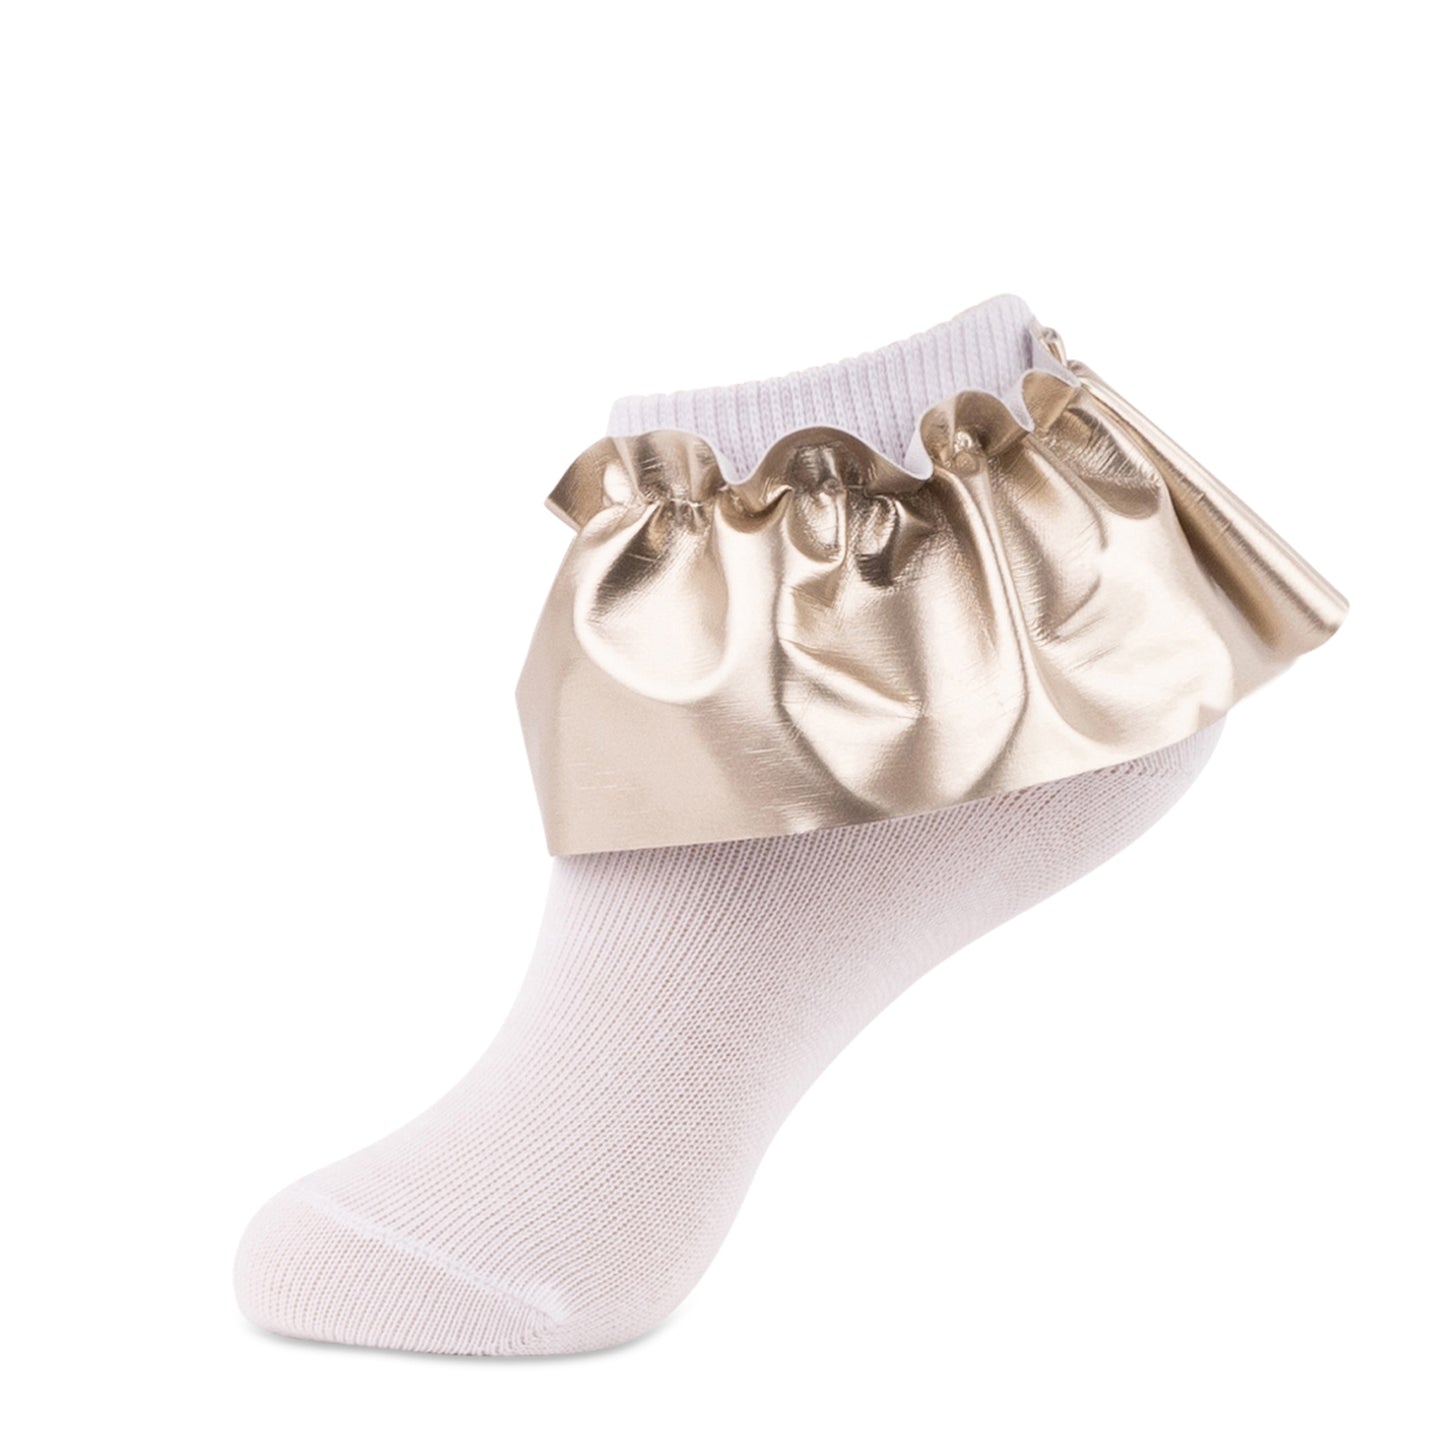 jrp socks gold leatherette ruffle lace anklet sock